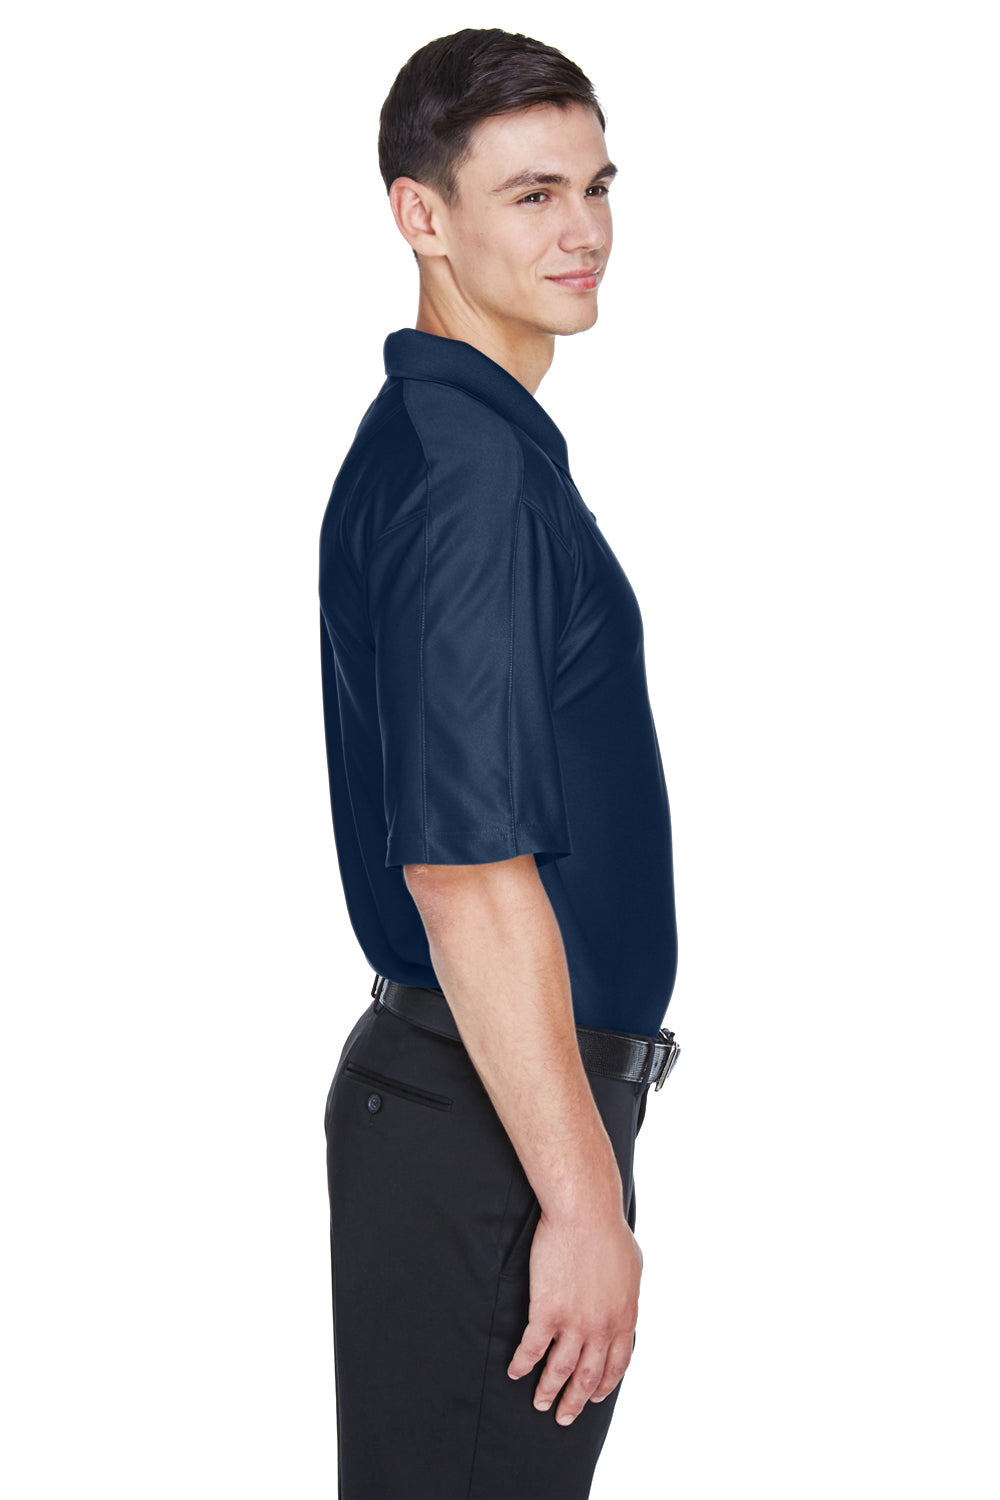 UltraClub 8415 Mens Cool & Dry Elite Performance Moisture Wicking Short Sleeve Polo Shirt Navy Blue Side